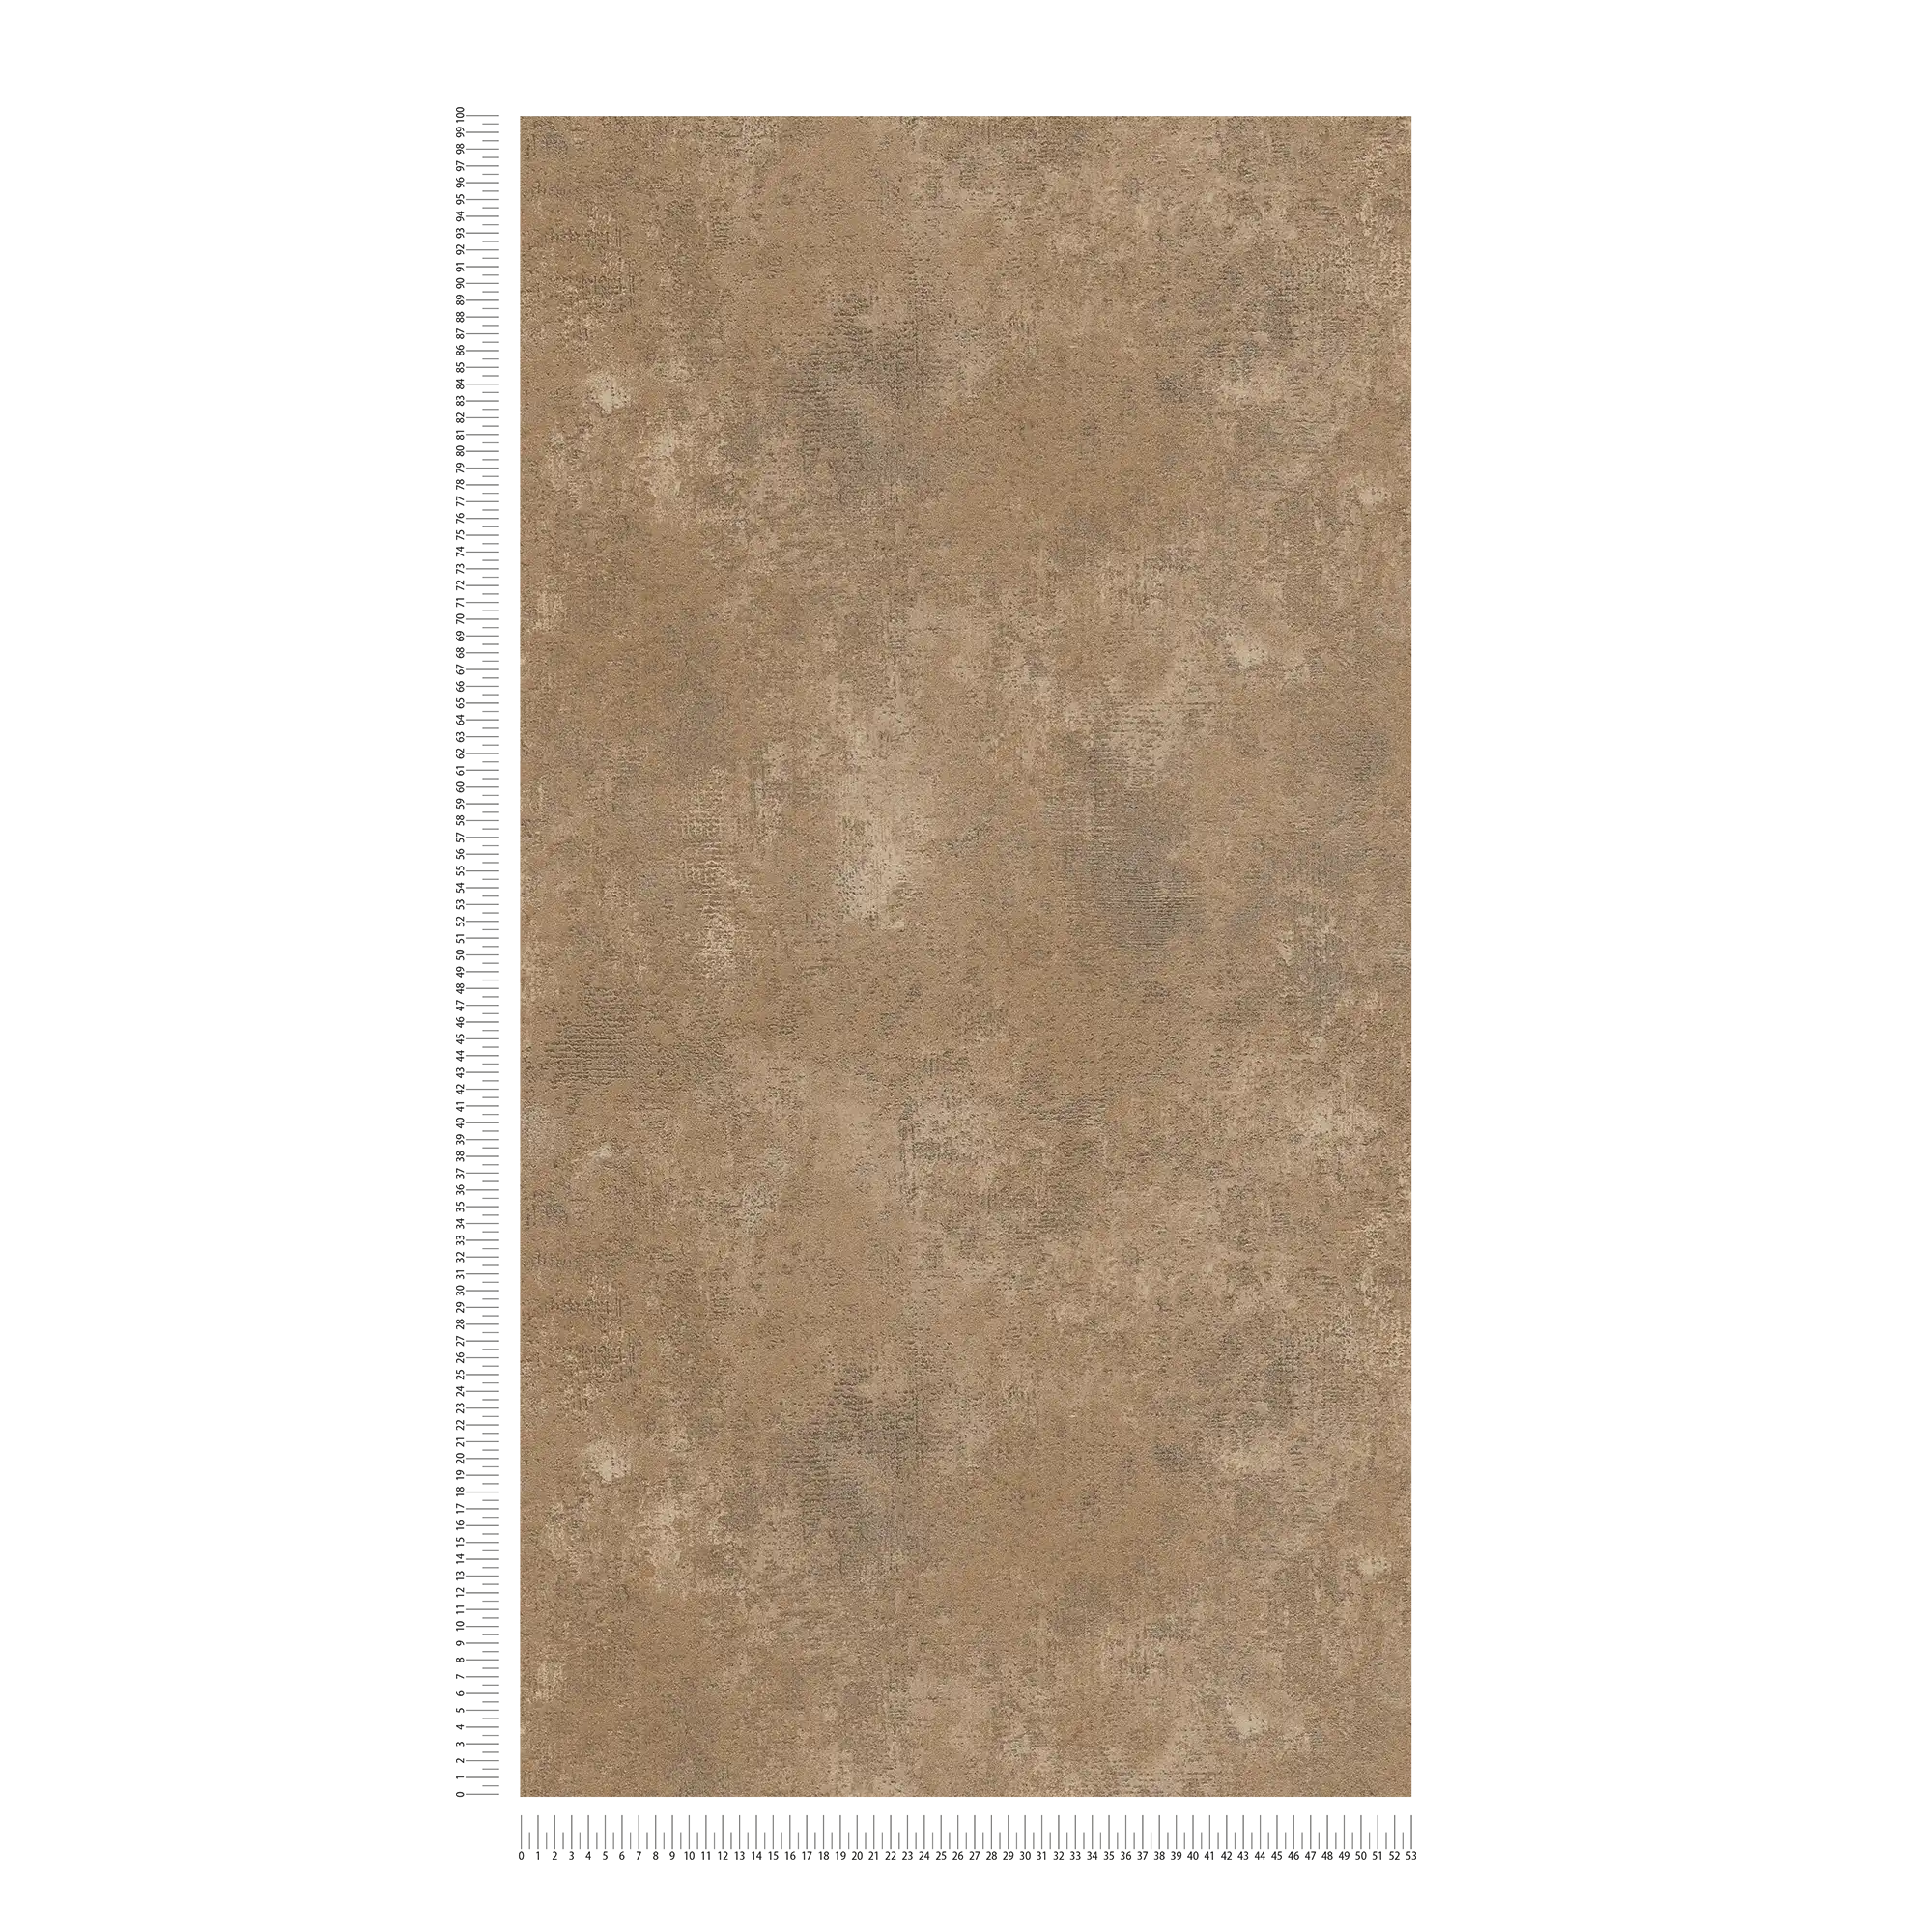             Wallpaper bronze monochrome with metallic accent - brown
        